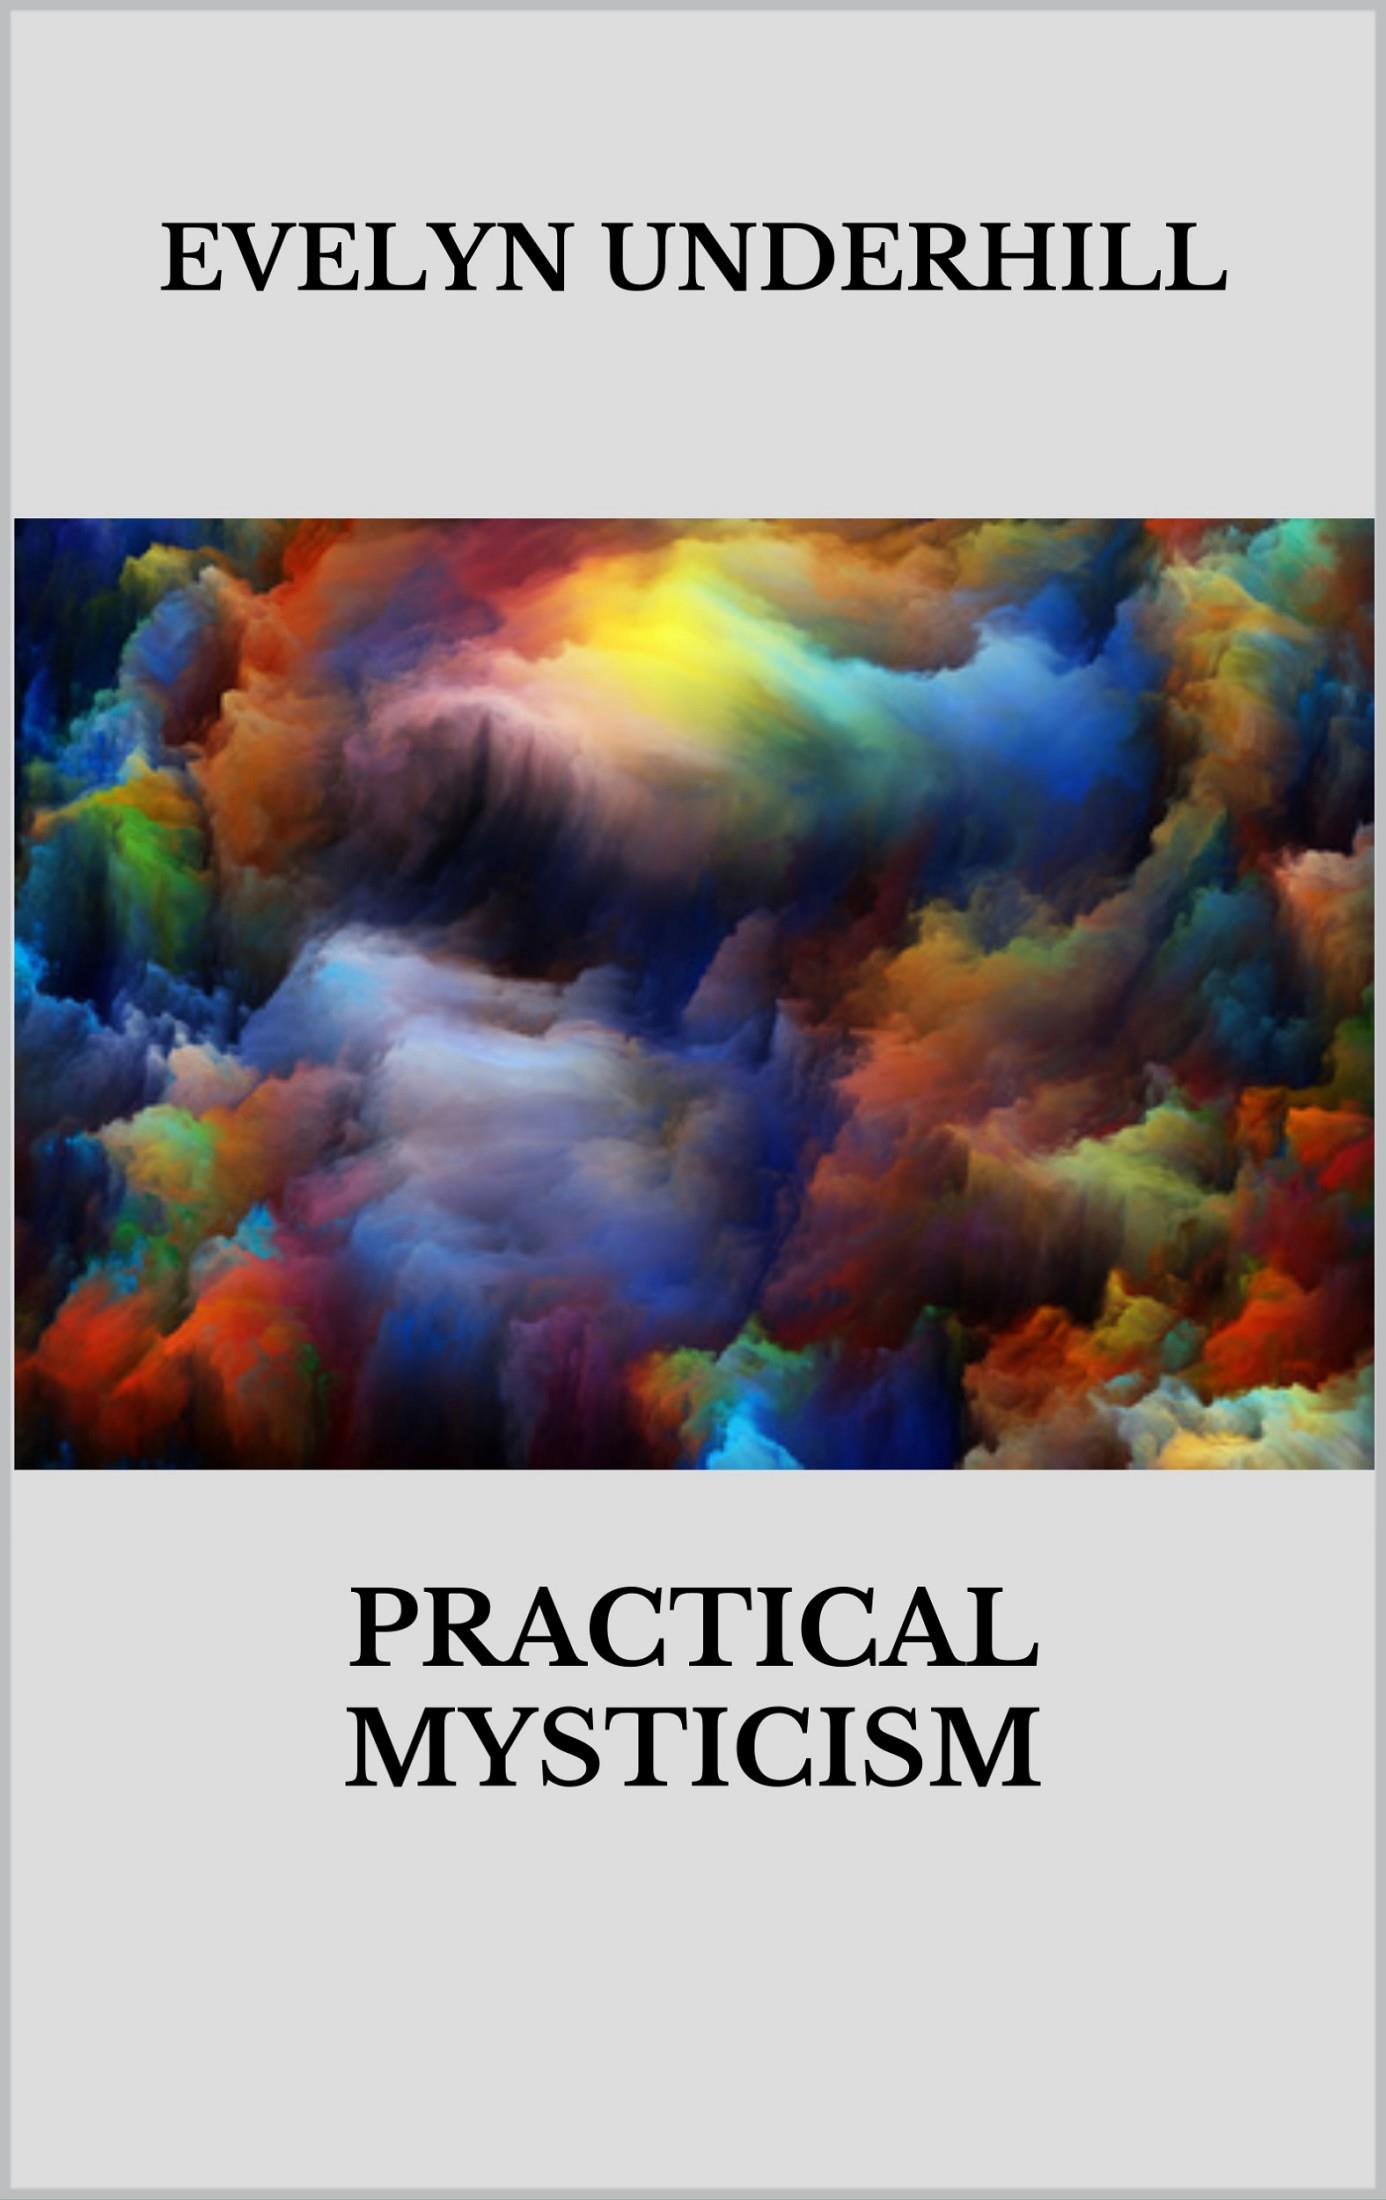 Practical mysticism